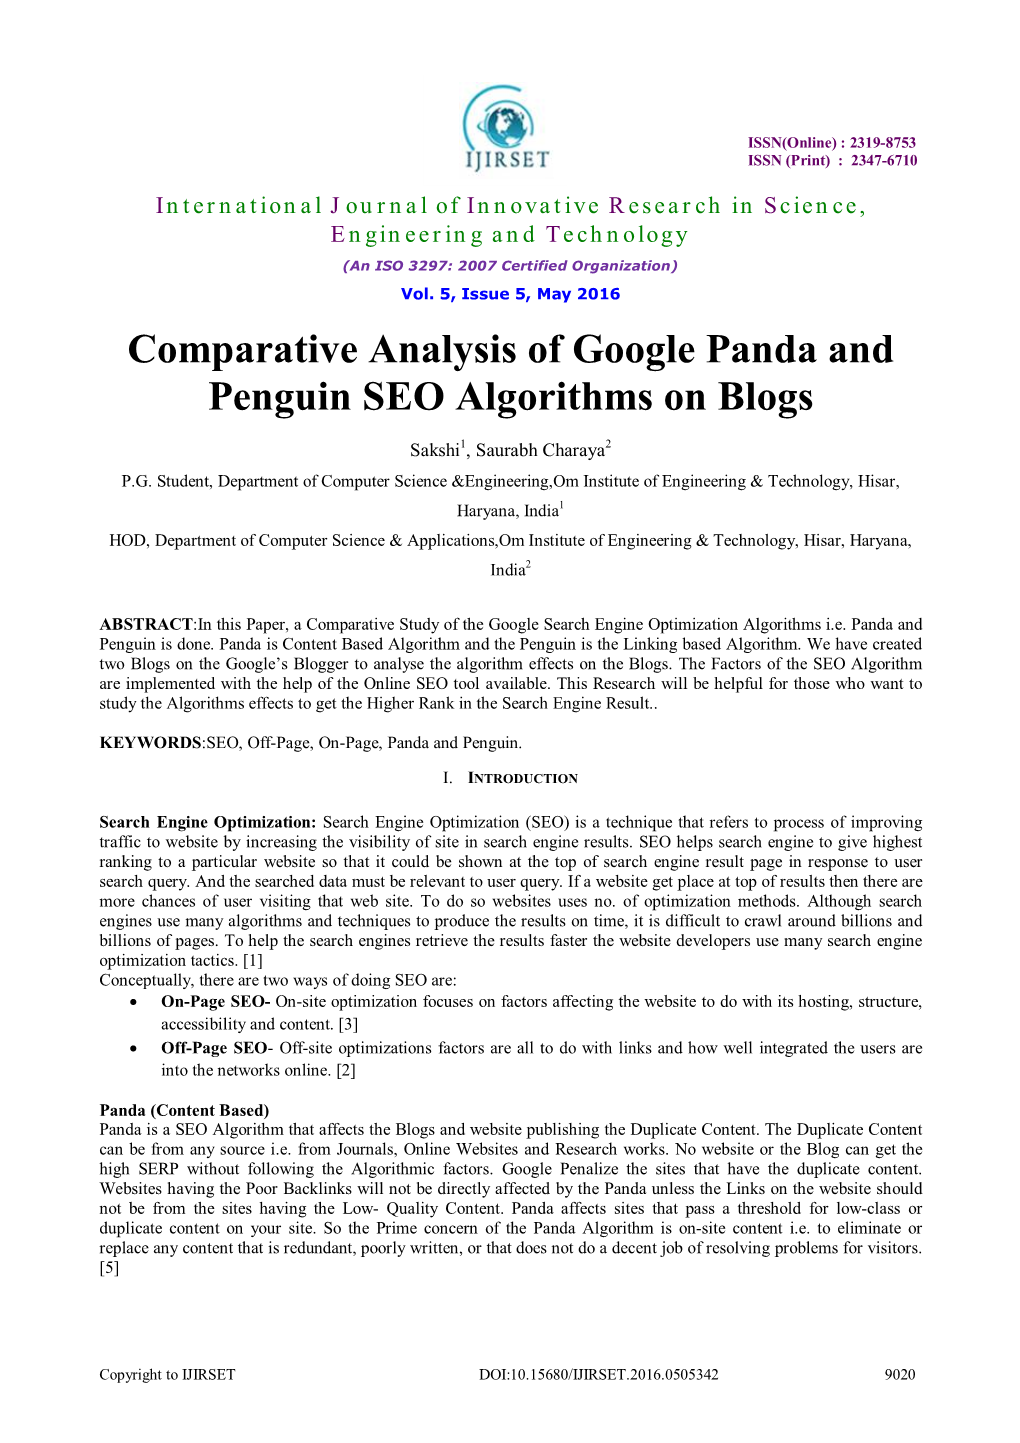 Comparative Analysis of Google Panda and Penguin SEO Algorithms on Blogs